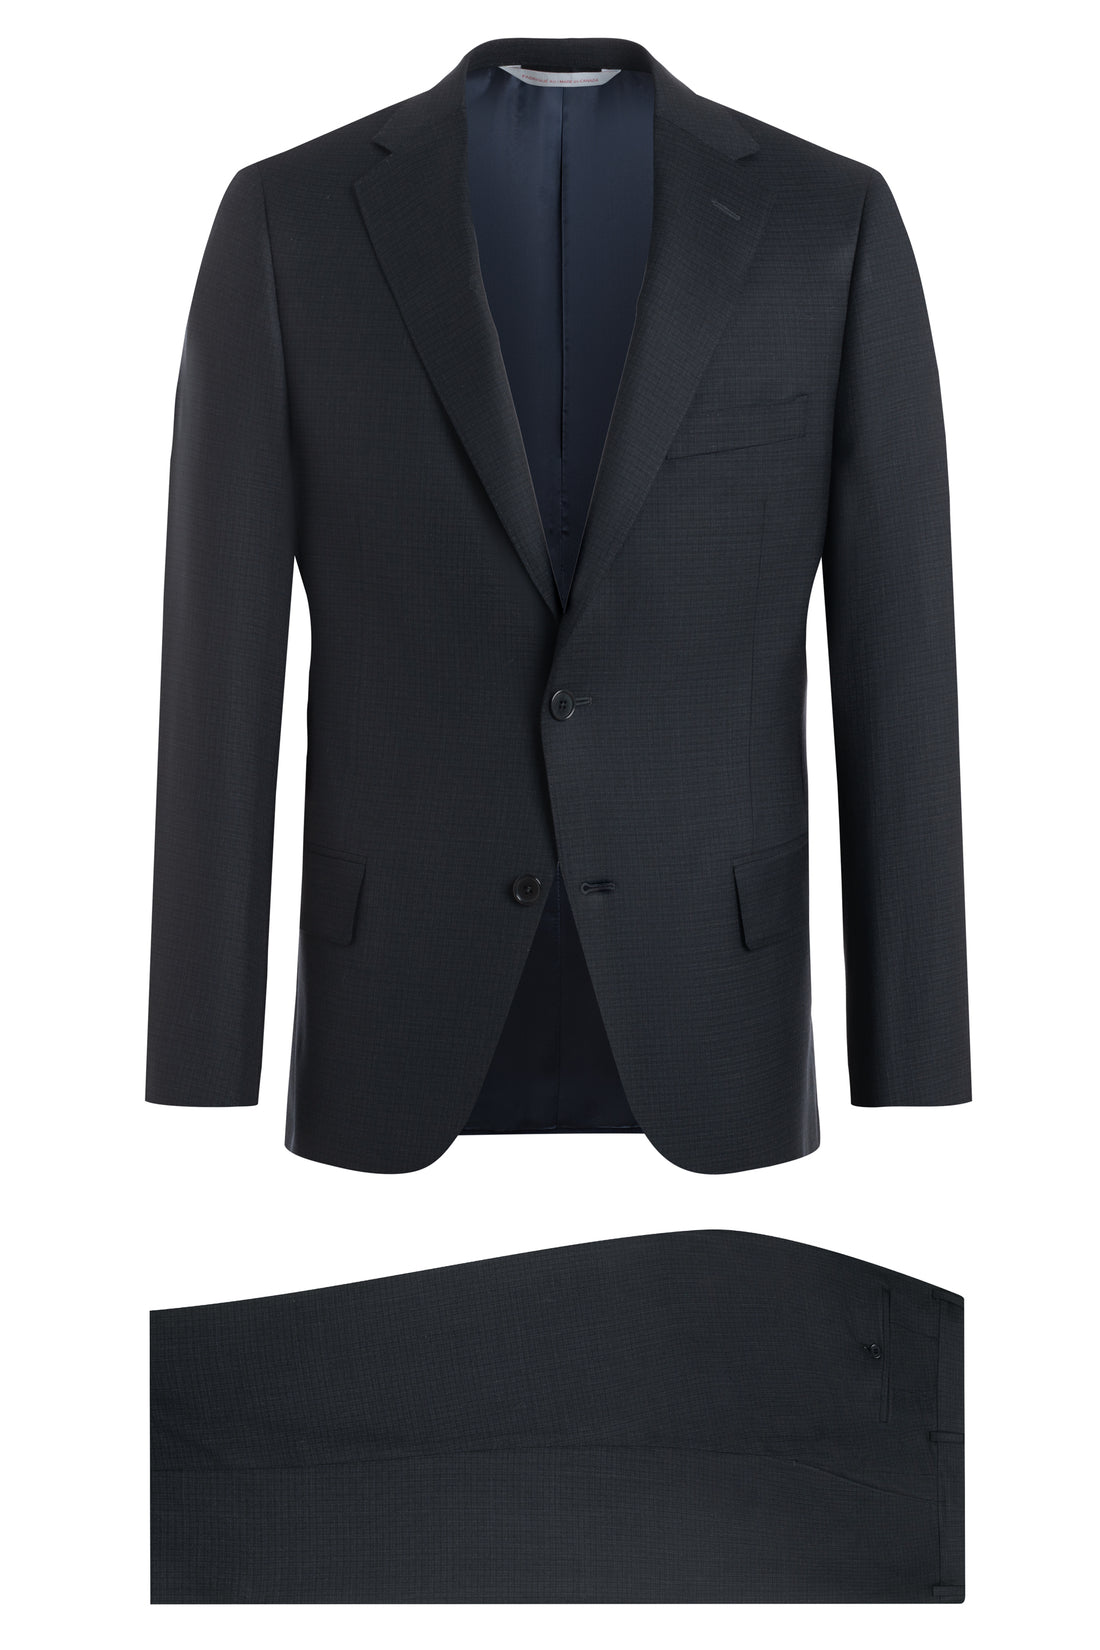 Charcoal Zegna Tonal Check Suit